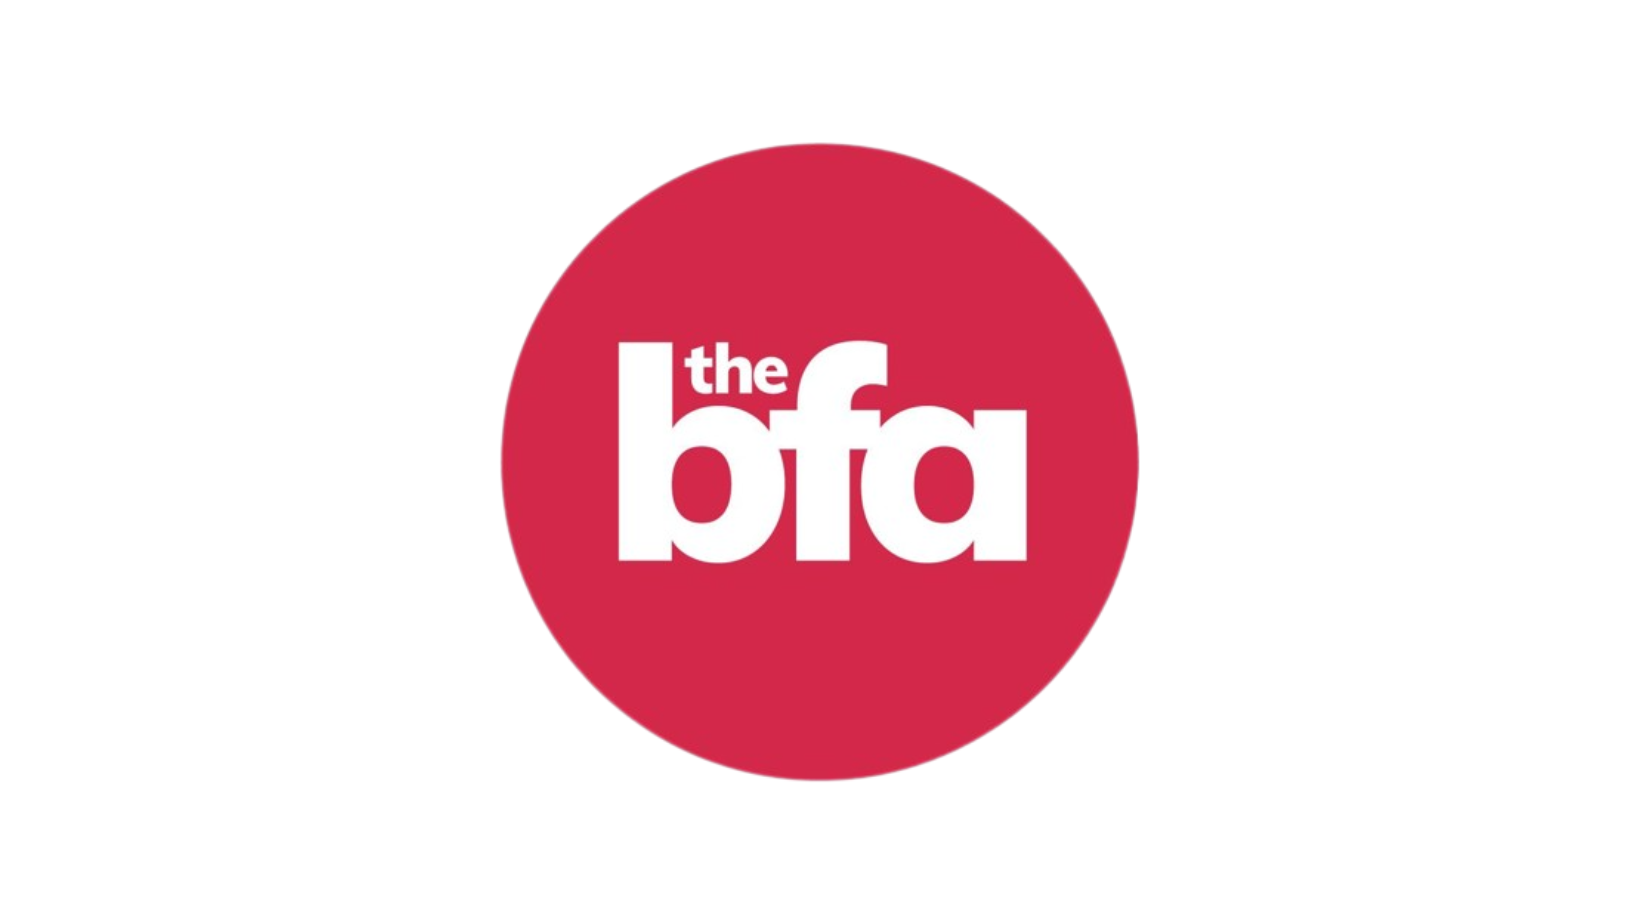 The British Franchise Association